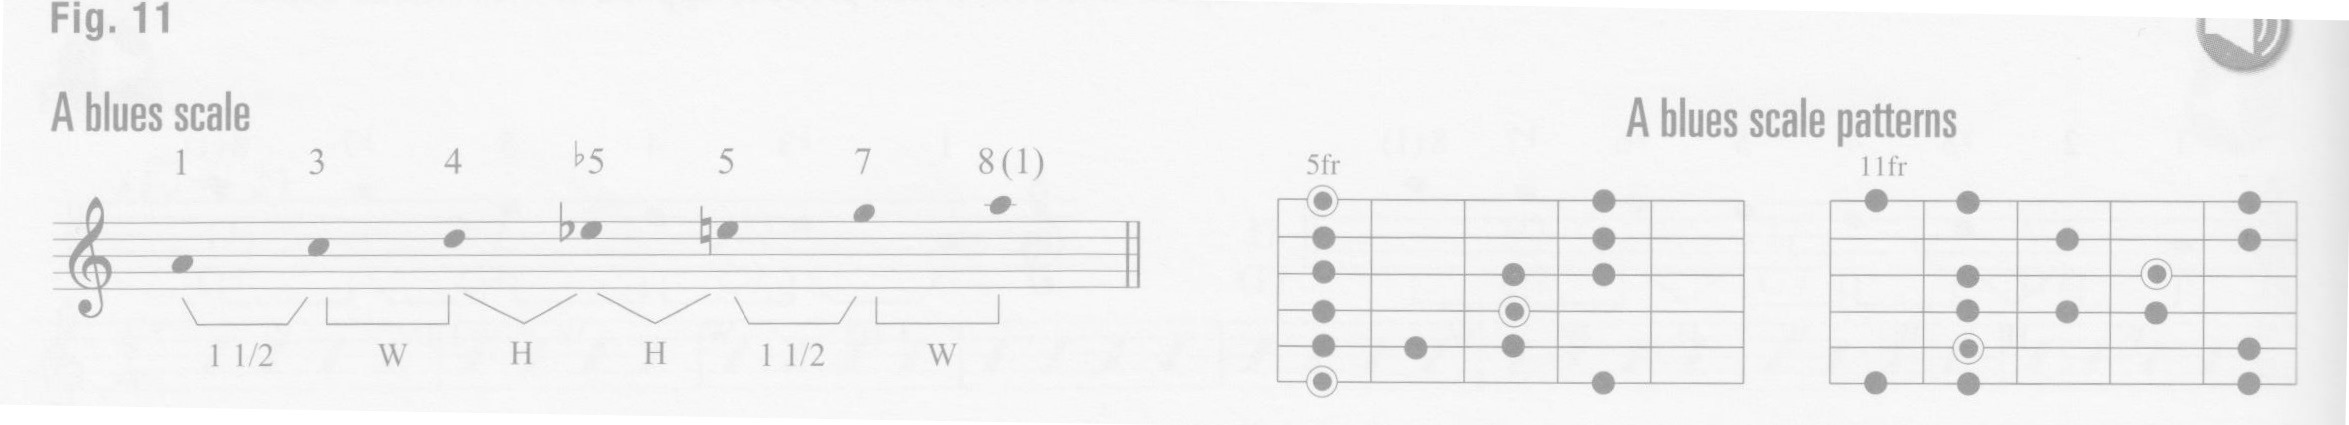 p64-blues-scale